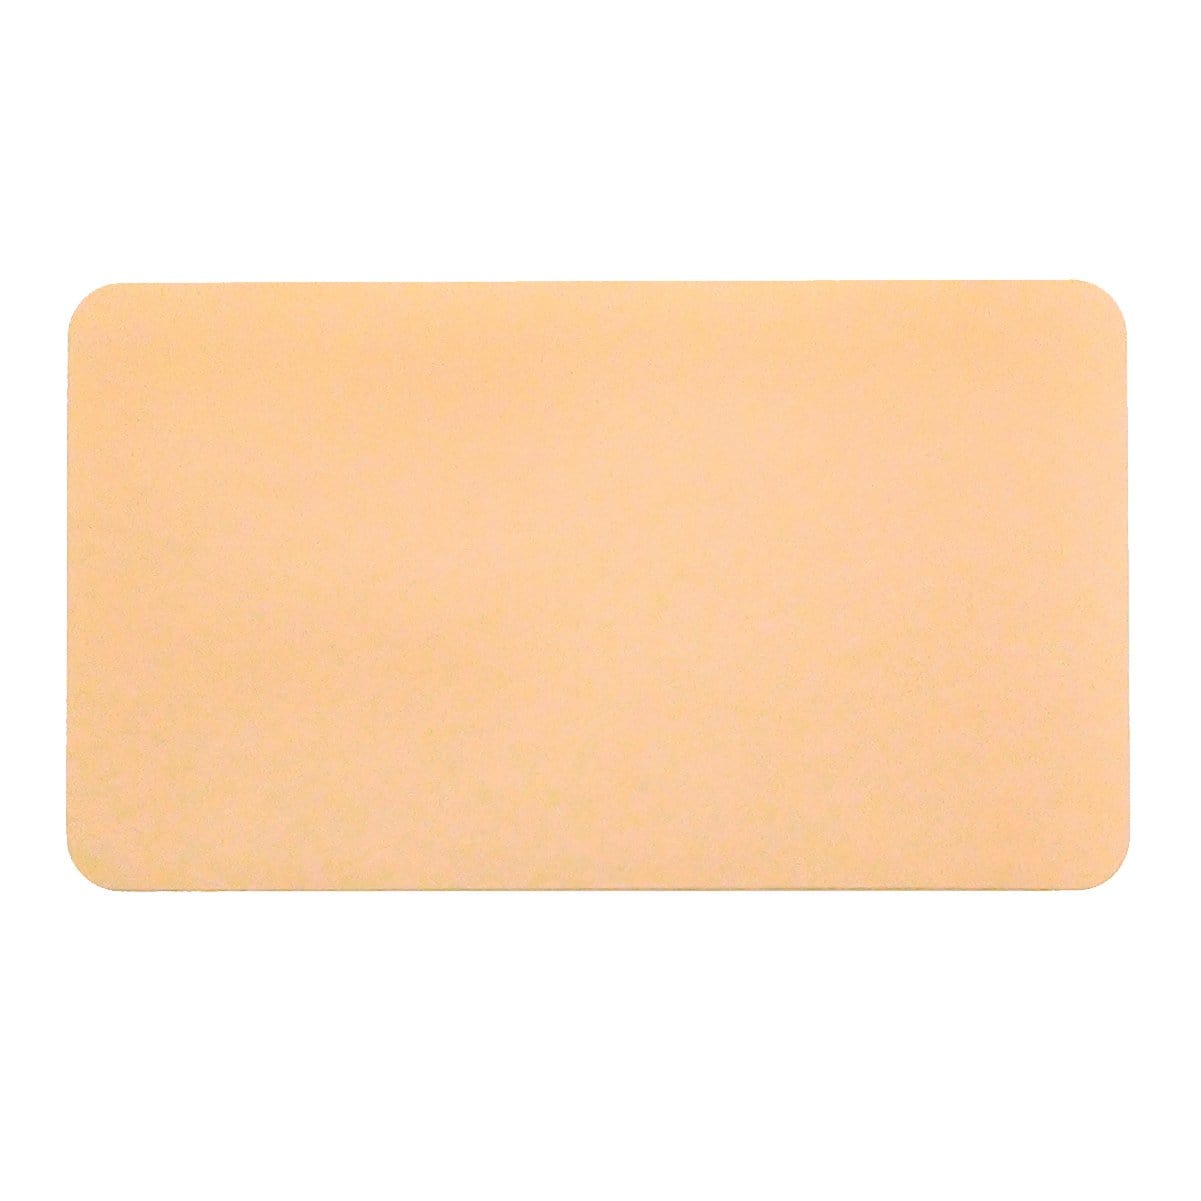 Peach Thermal-printable Non-expiring Printable Adhesive Badges, Box of 1000 (P/N 0408X) 04083